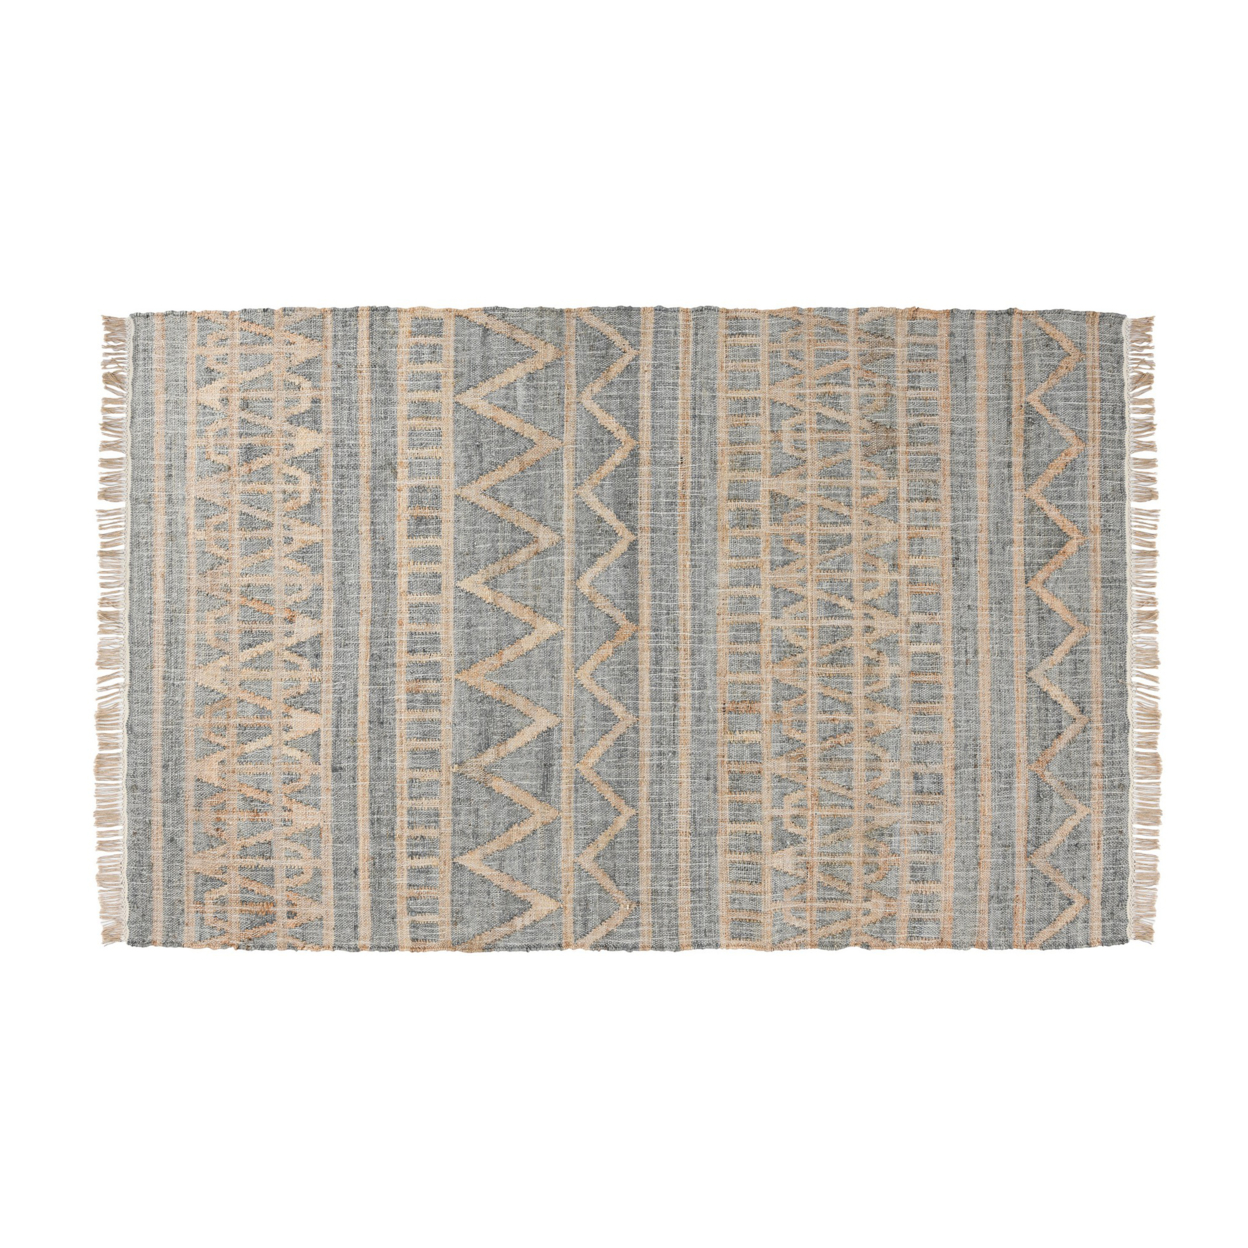 Myra 5 X 8 Area Rug, Soft Handwoven Moroccan Pattern, Brown And Blue Jute- Saltoro Sherpi